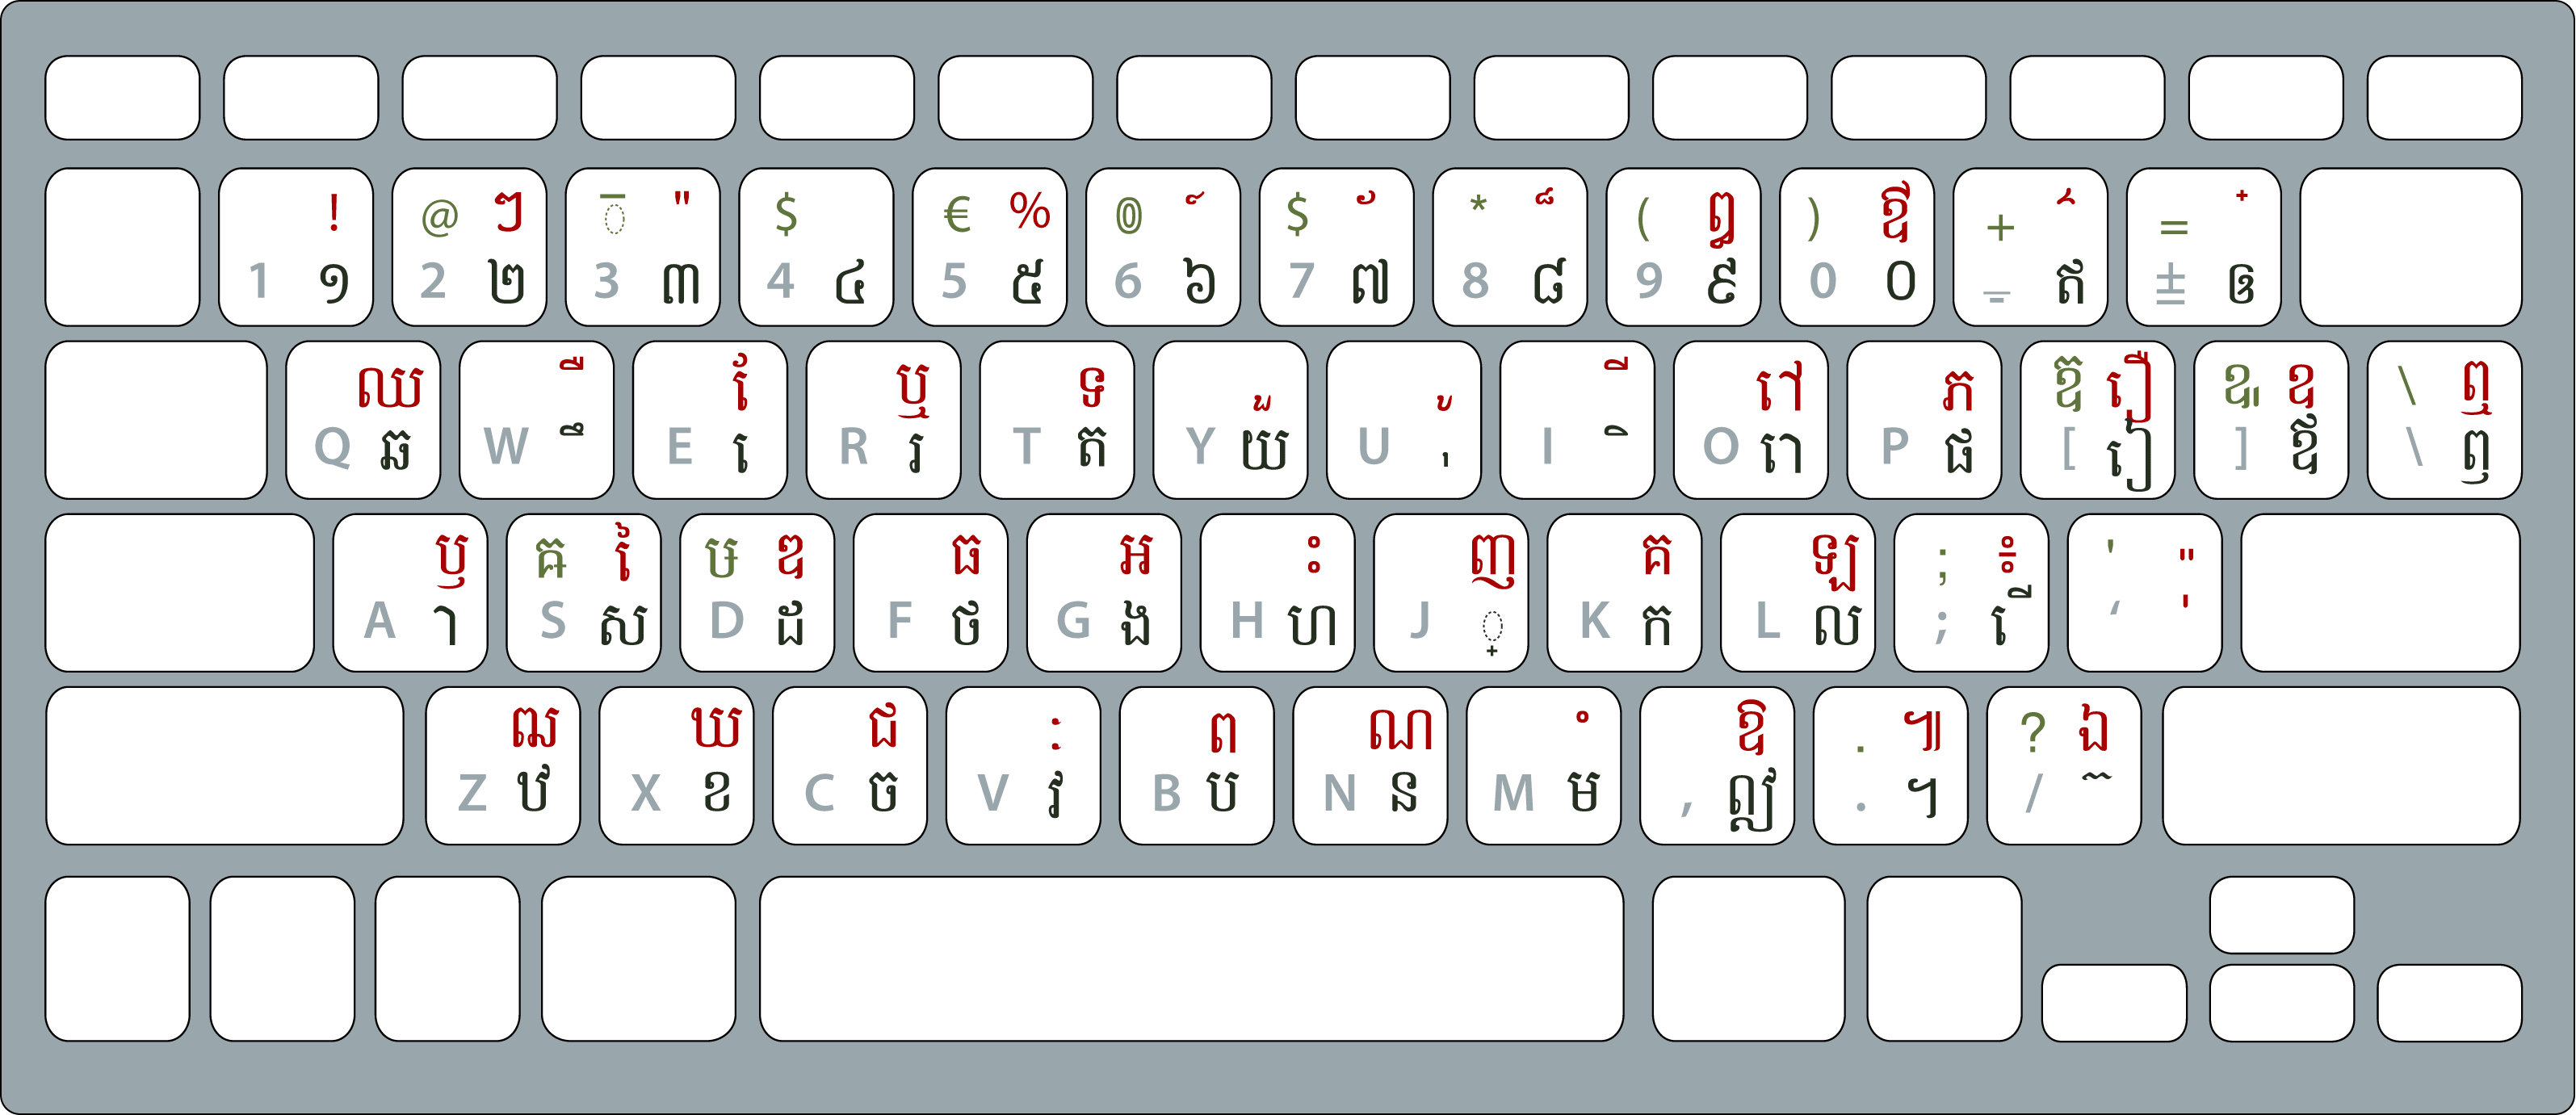 Khmer Unicode Keyboard Layout Hresaelectric